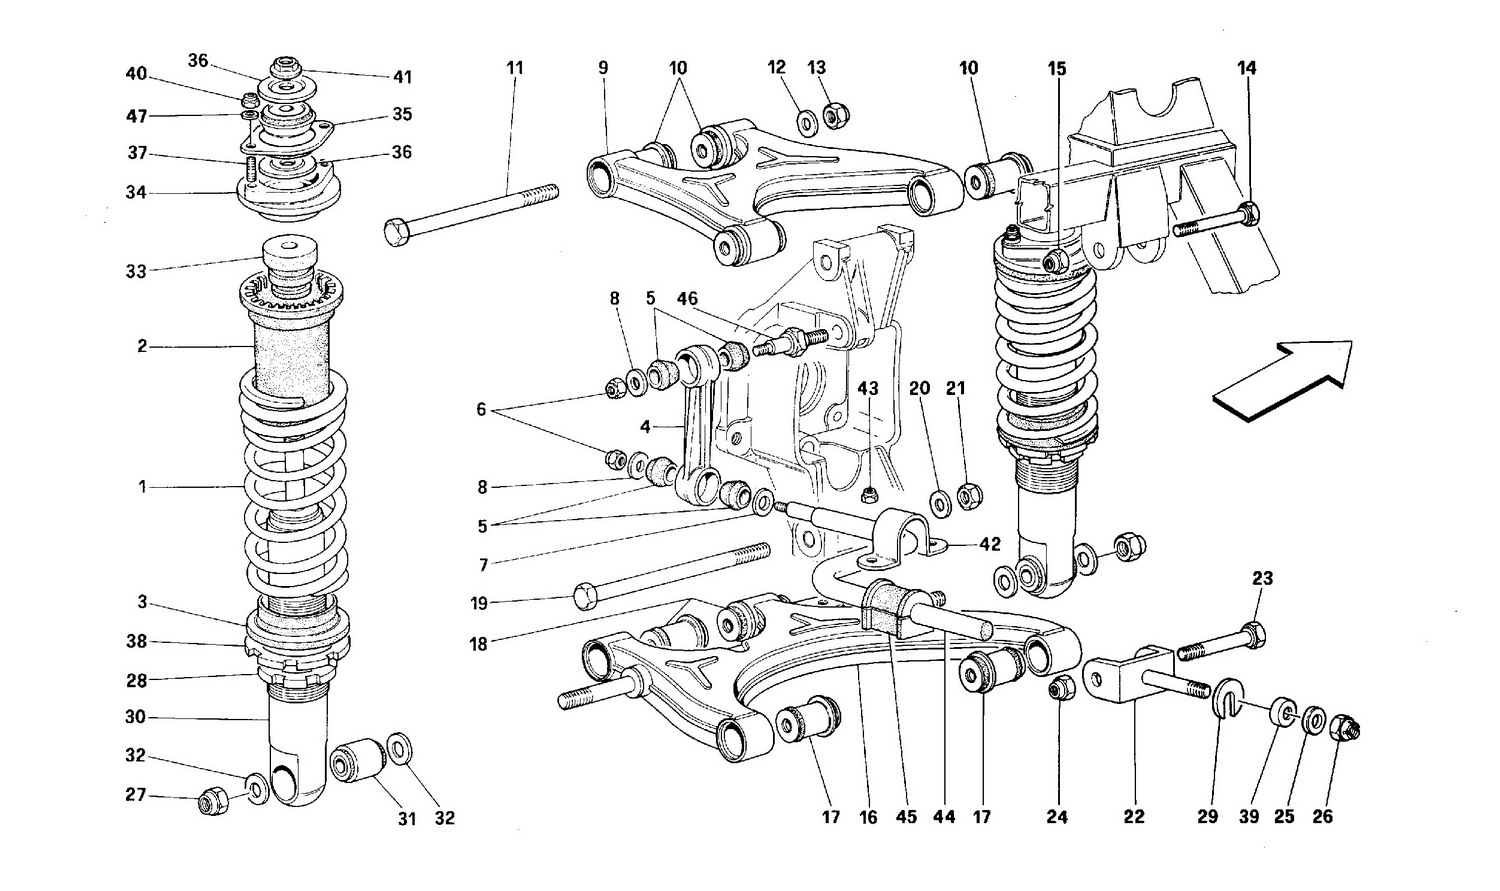 Rear Suspension Wishbones And Shock Absorbers Classic Ferrari Parts Schematics